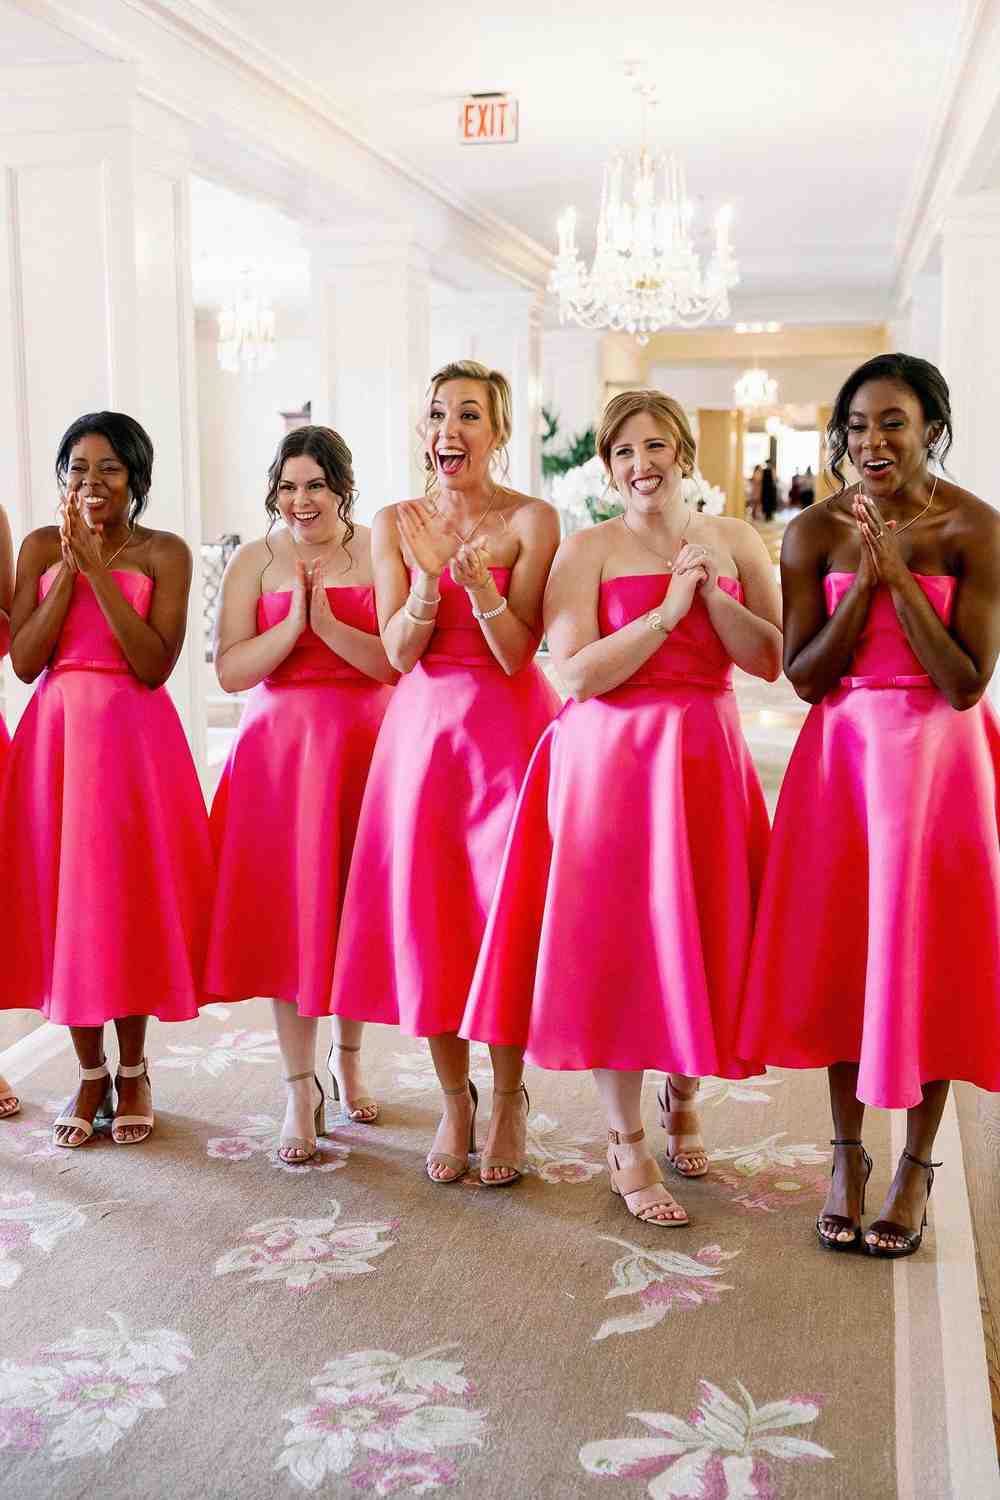 Tea Length Neon Pink Bridesmaid Dress VMB76